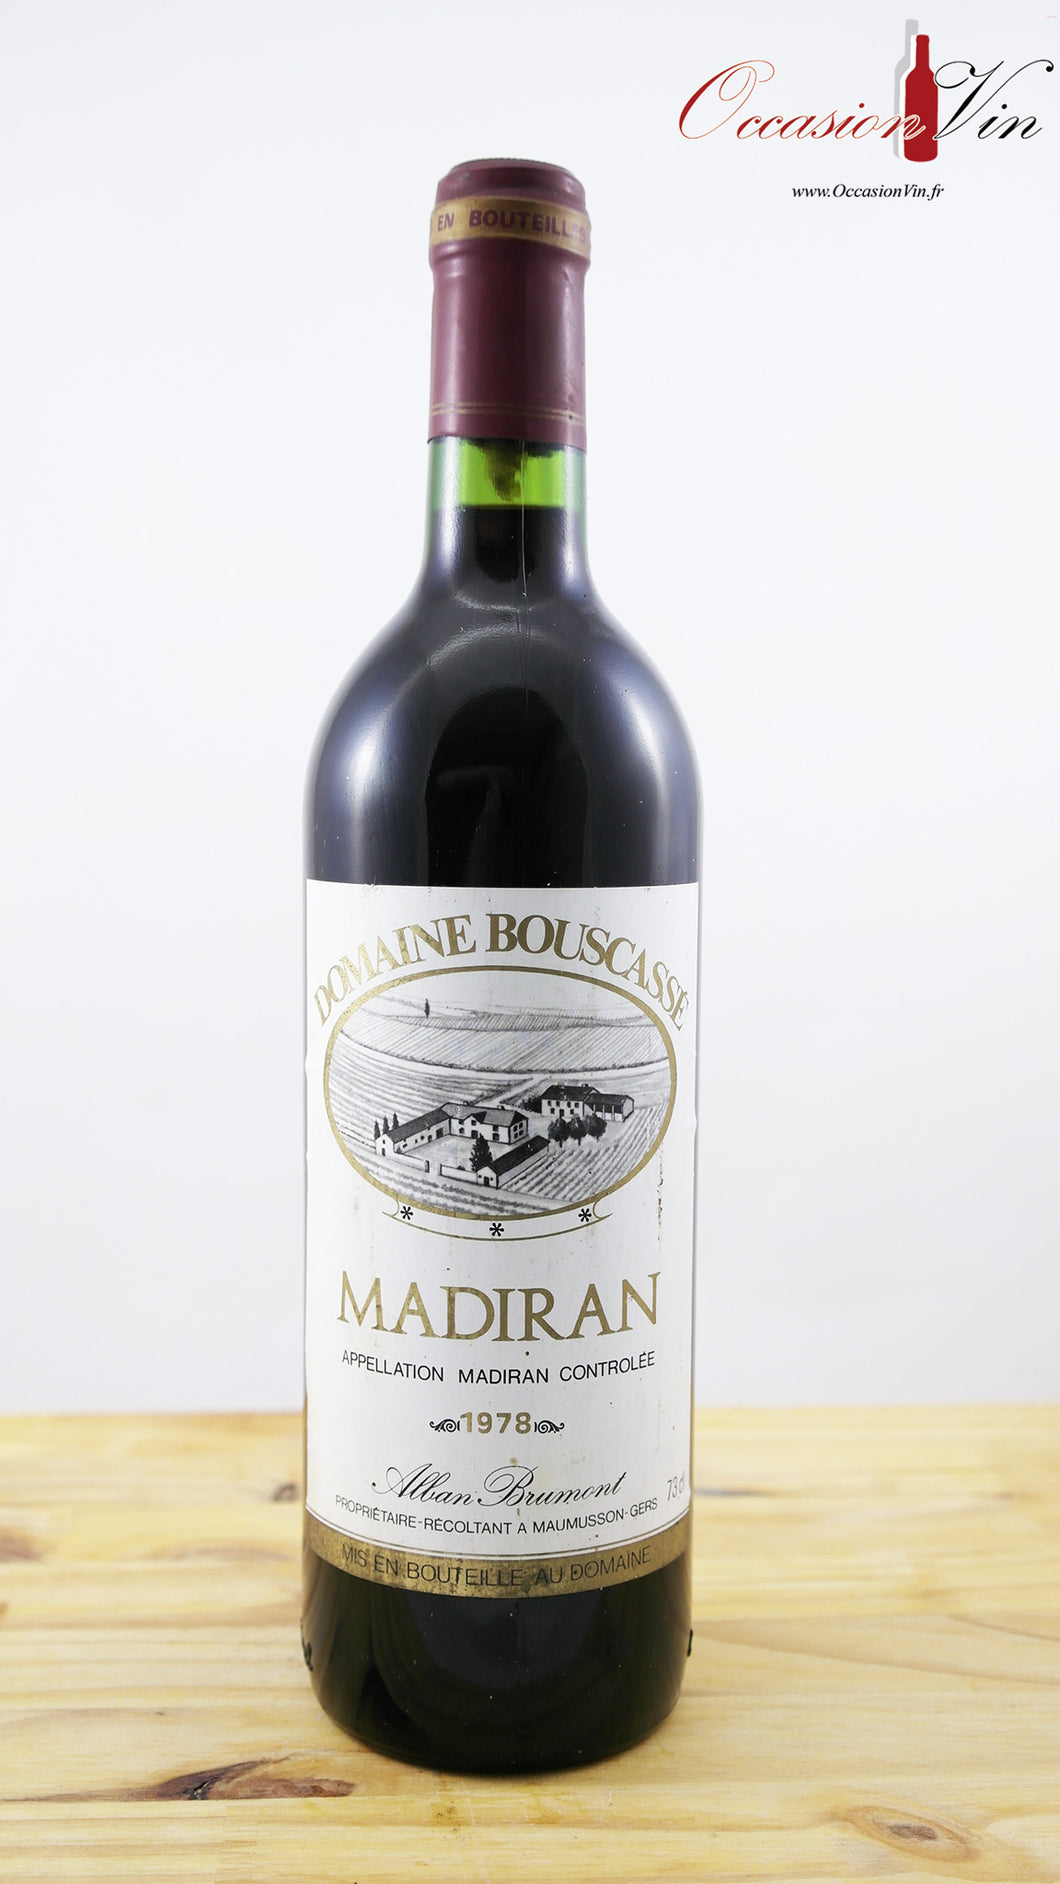 Madiran Domaine Bouscasse Vin 1978